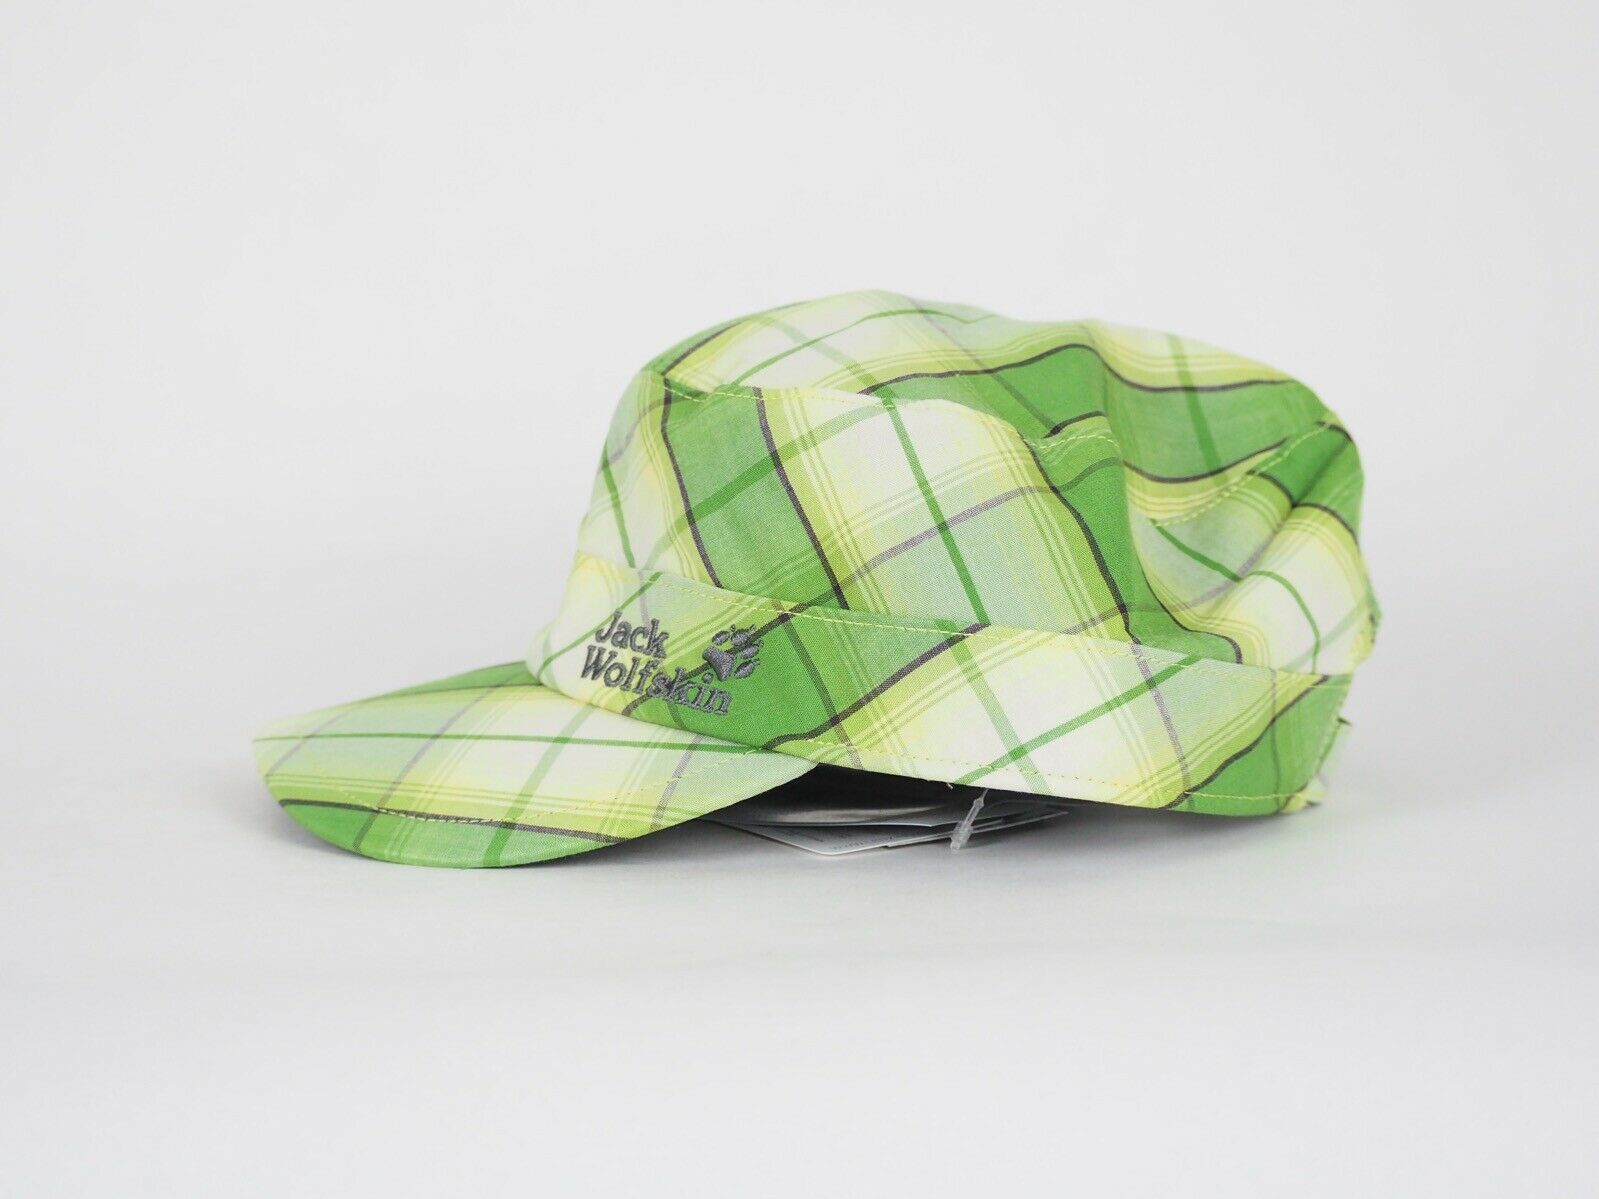 Jack Wolfskin Fairford 5008271 Basil Green Checks Cap Casual Kids Summer Hat - London Top Style